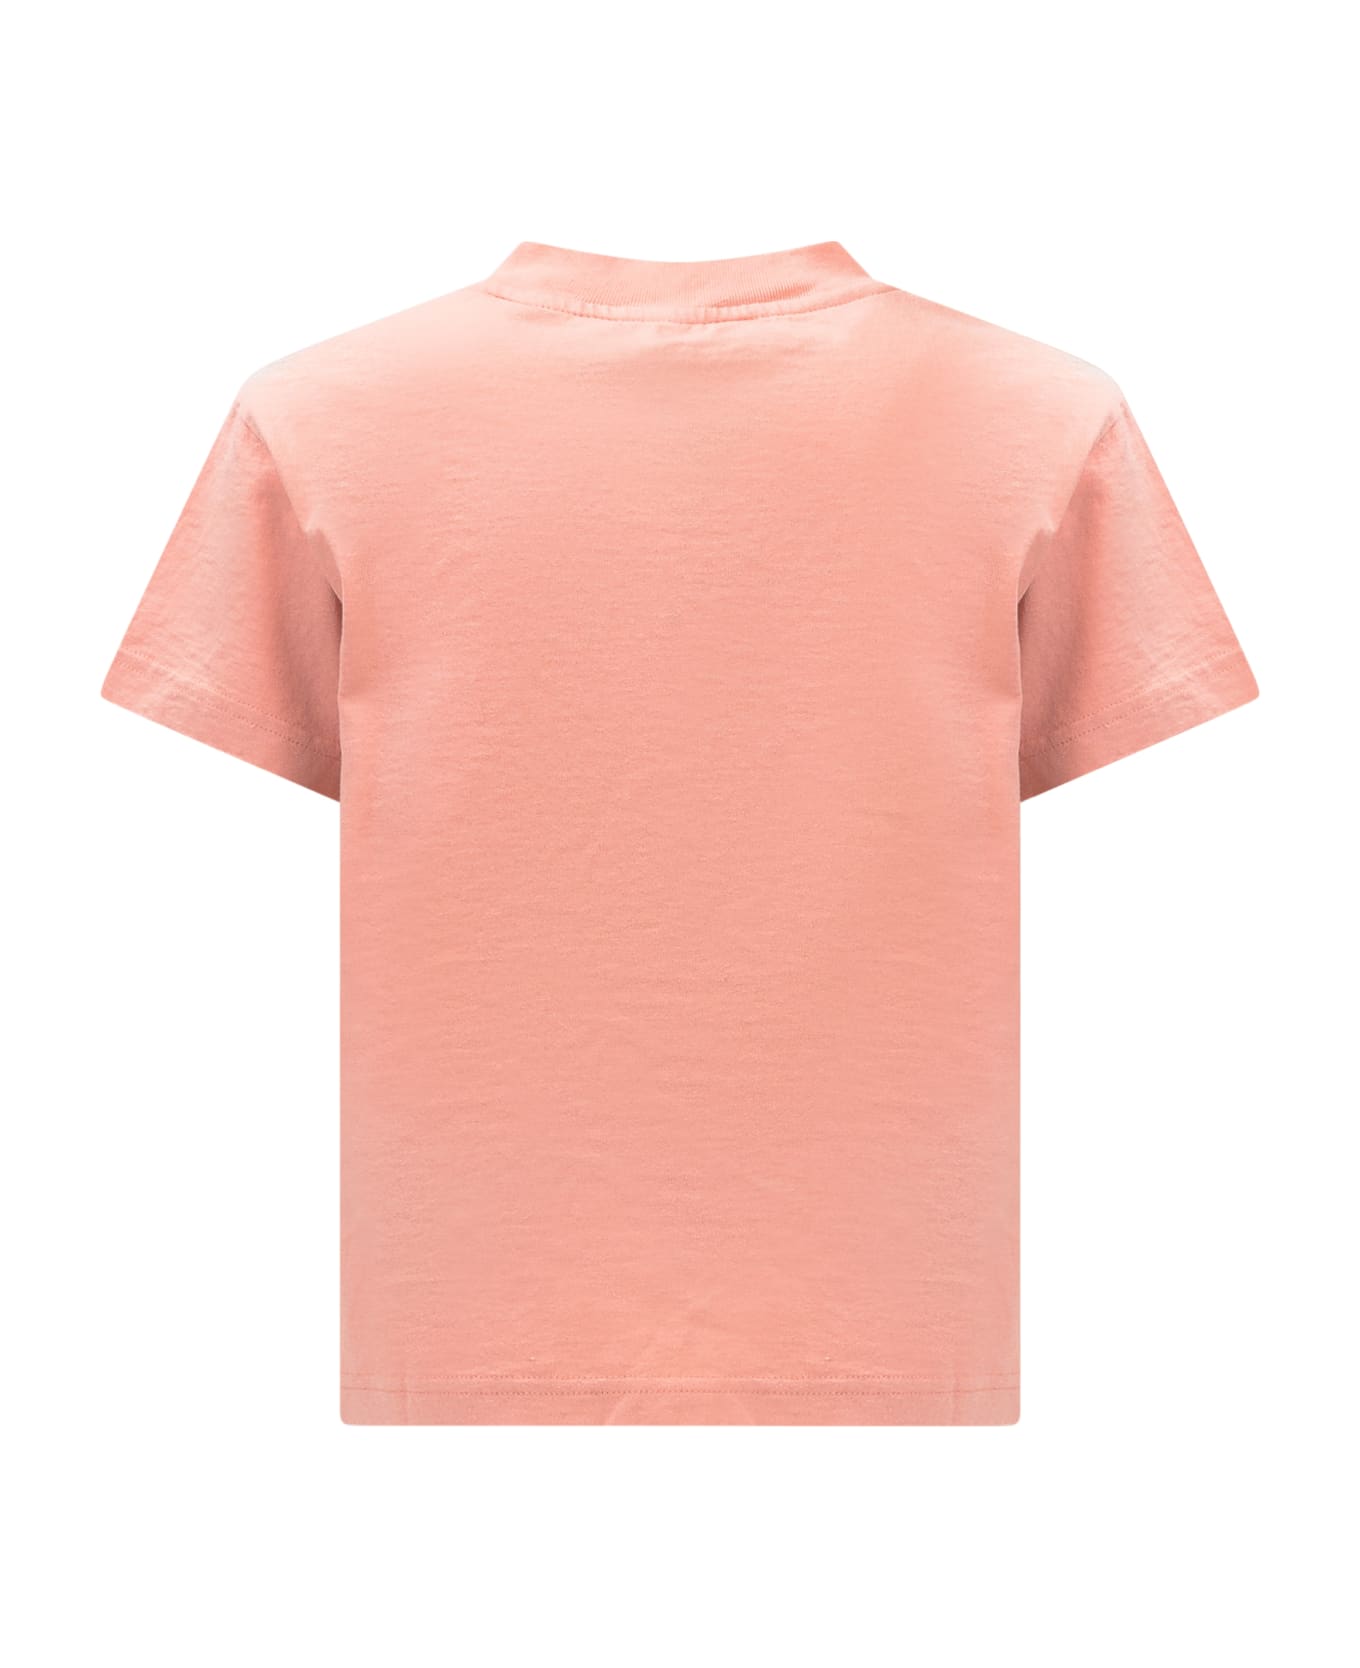 Palm Angels Bear T-shirt - Pink Brown